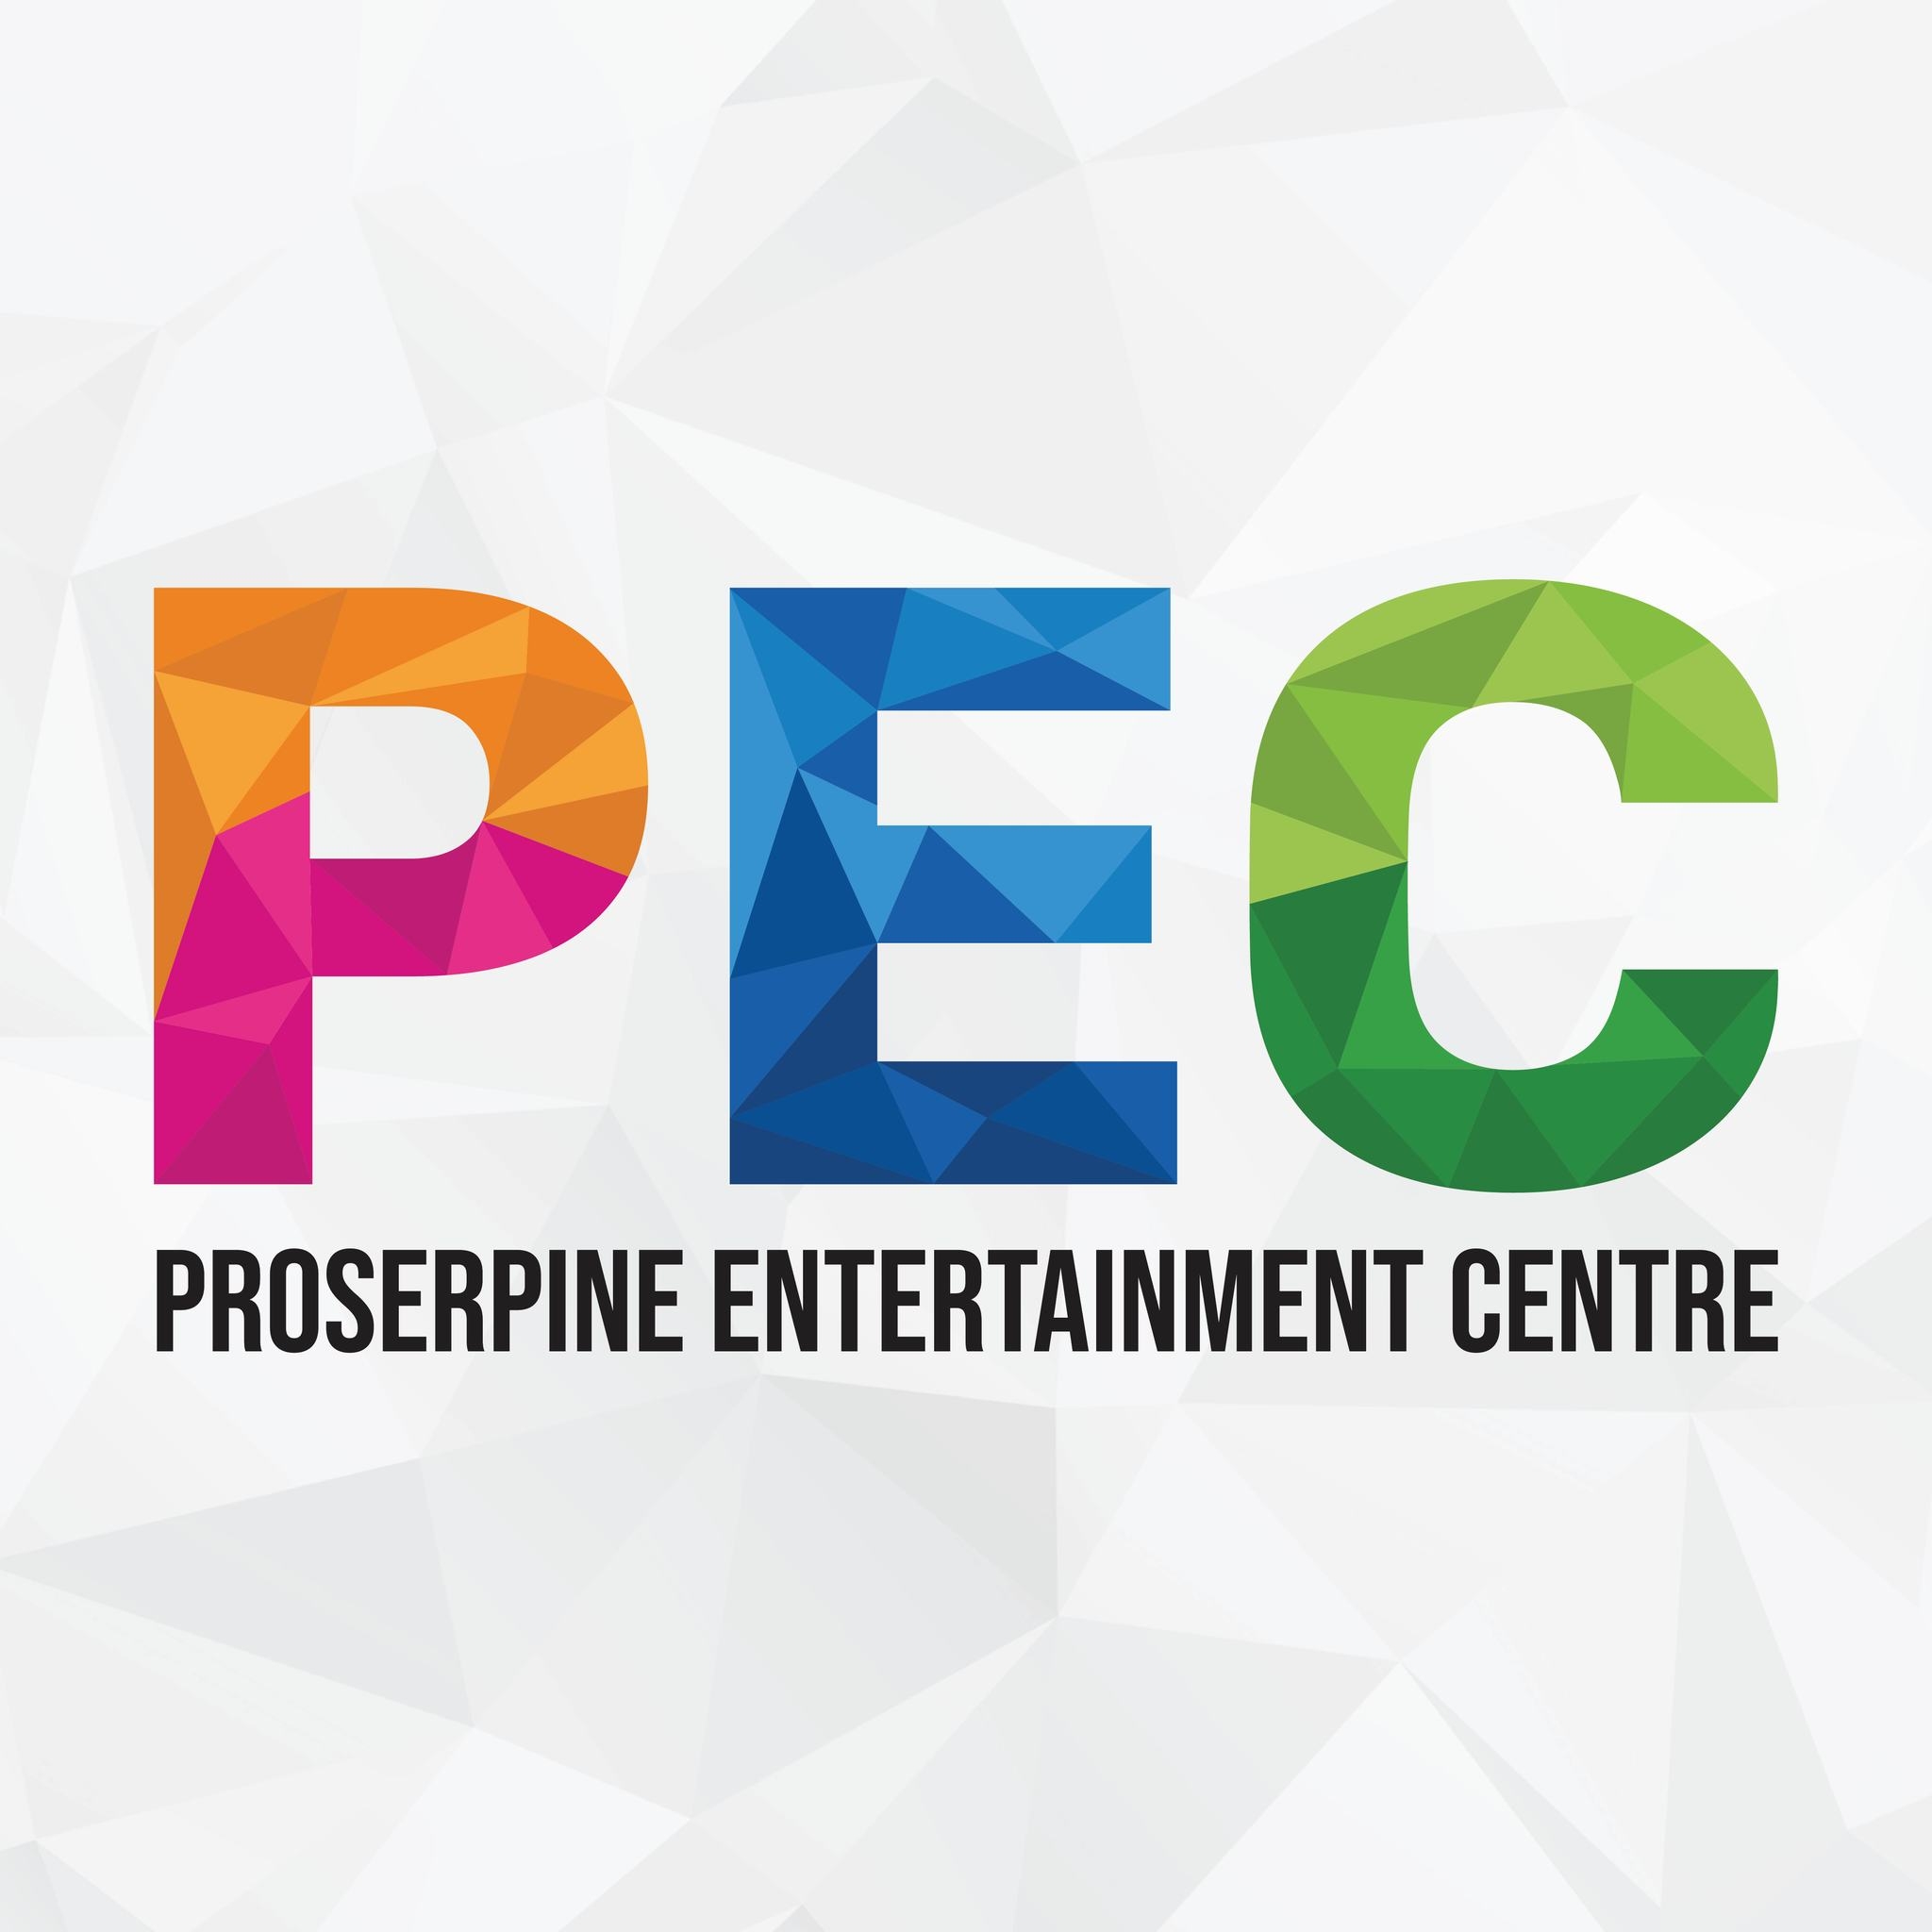 Proserpine Entertainment Centre